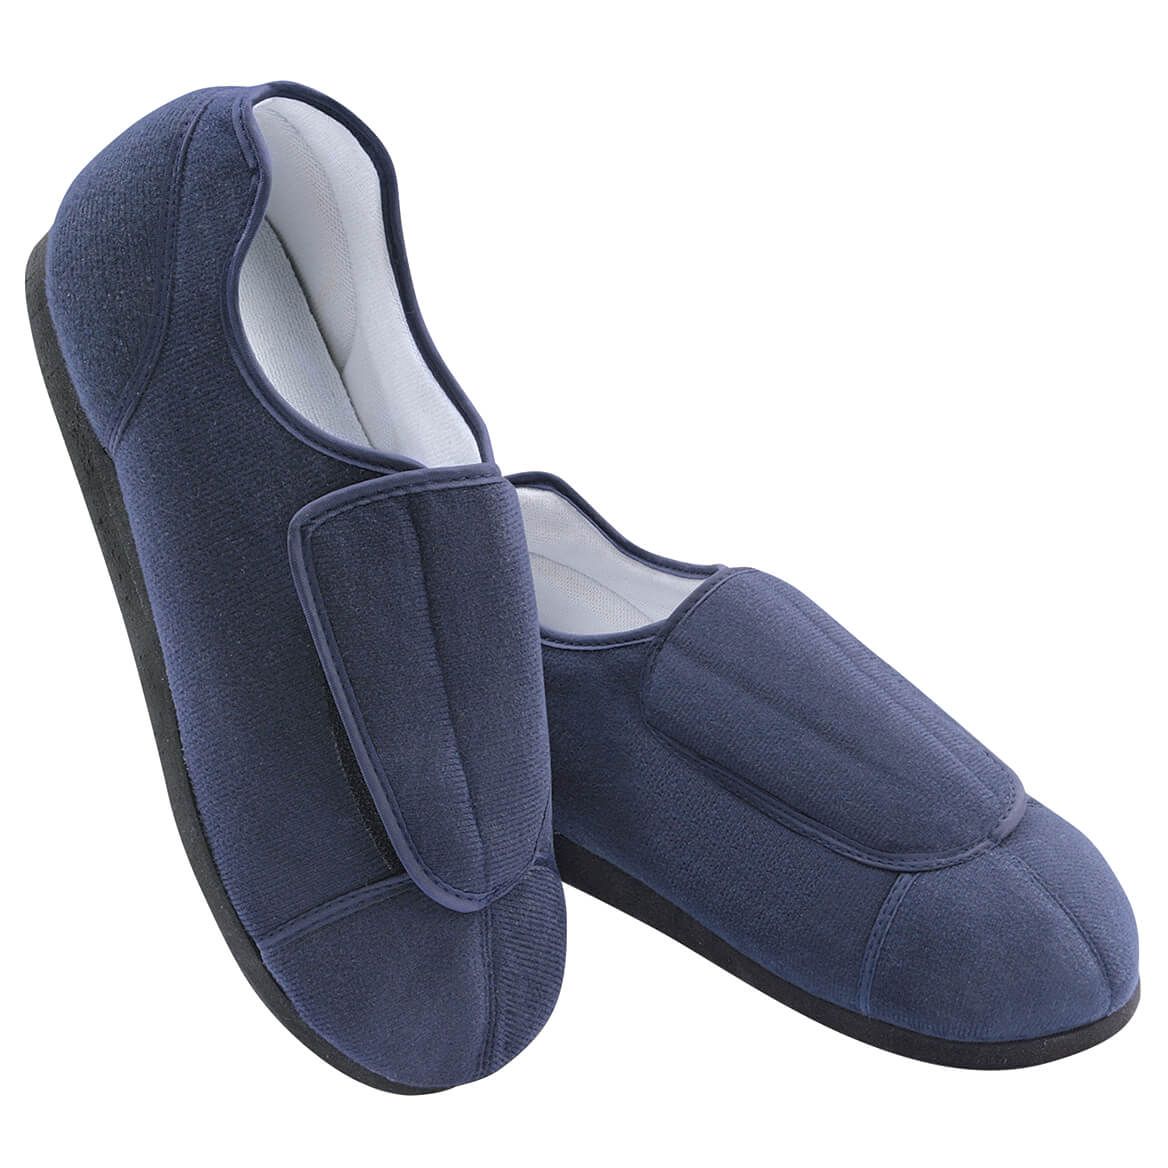 Adjustable Health Slippers Mens + '-' + 369895